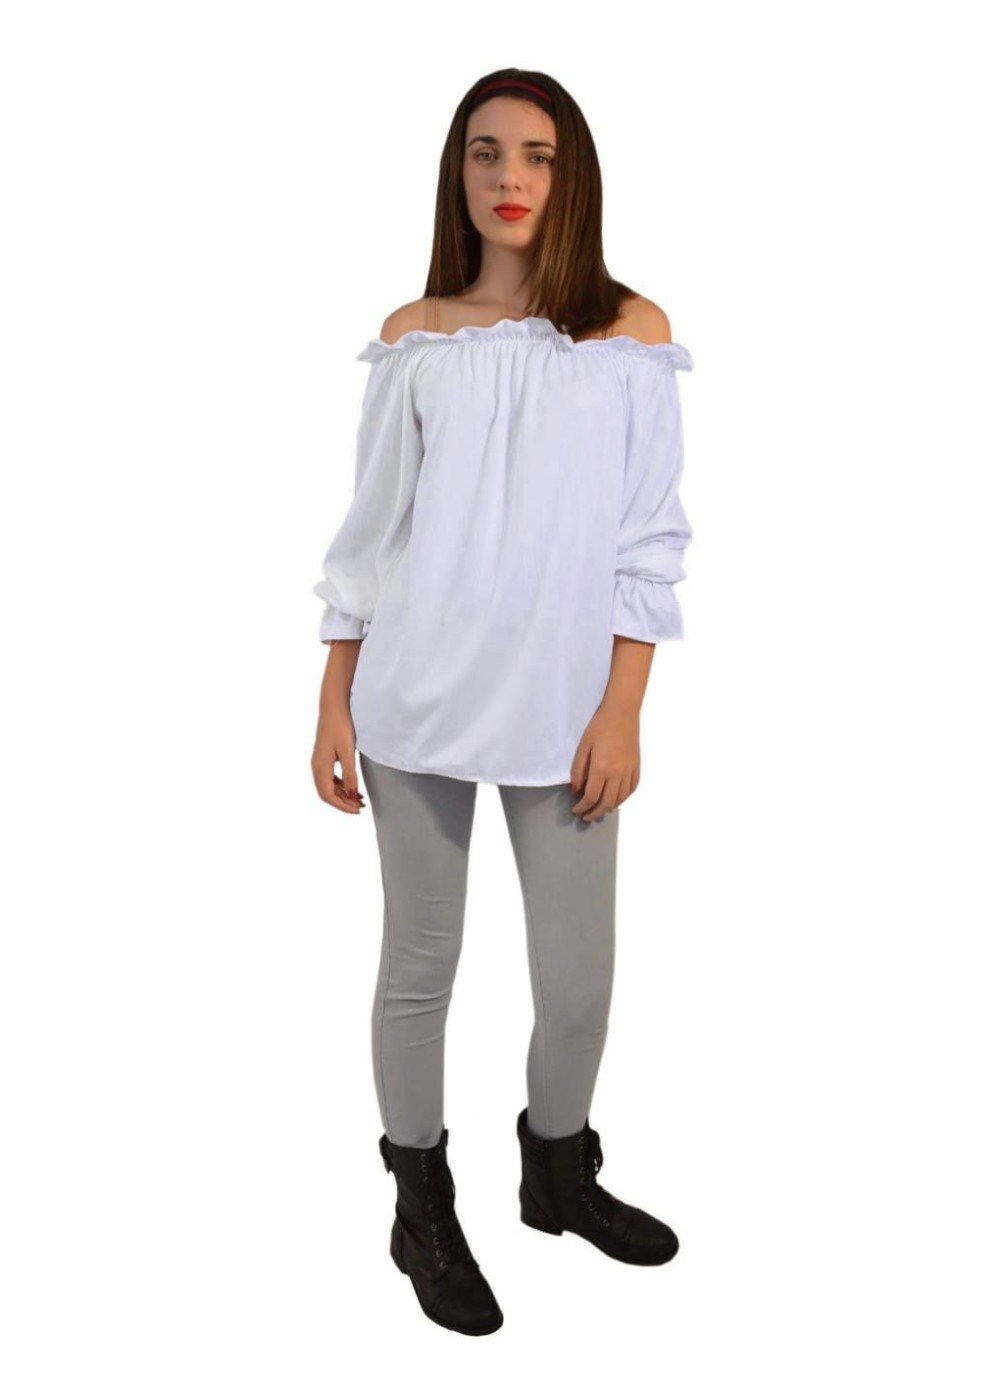 Renaissance Long Sleeve White Blouse Women Shirt